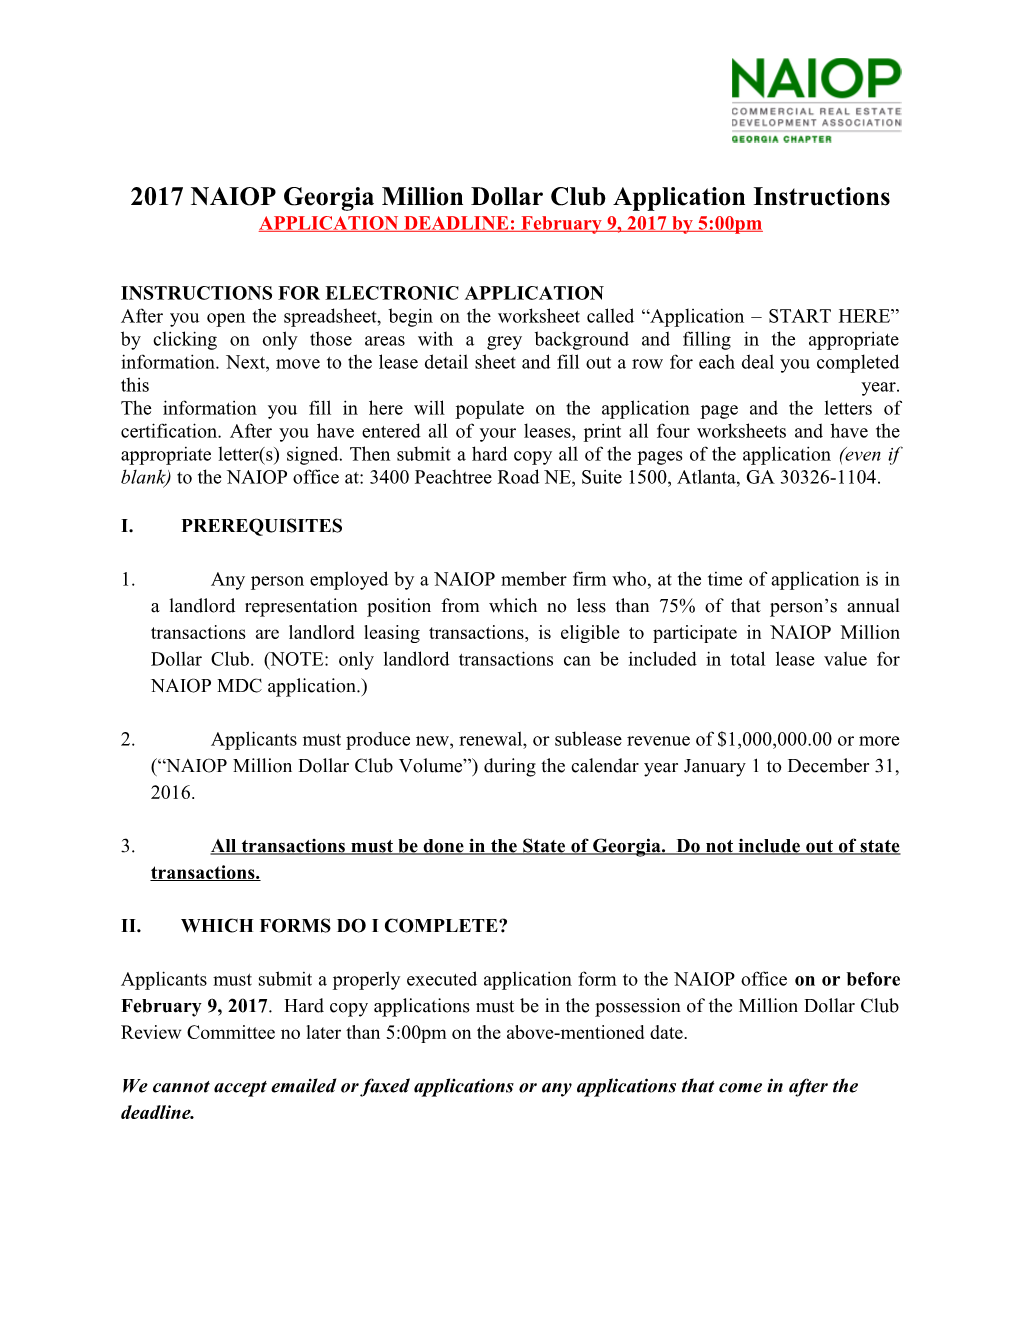 2017NAIOP Georgia Million Dollar Club Application Instructions